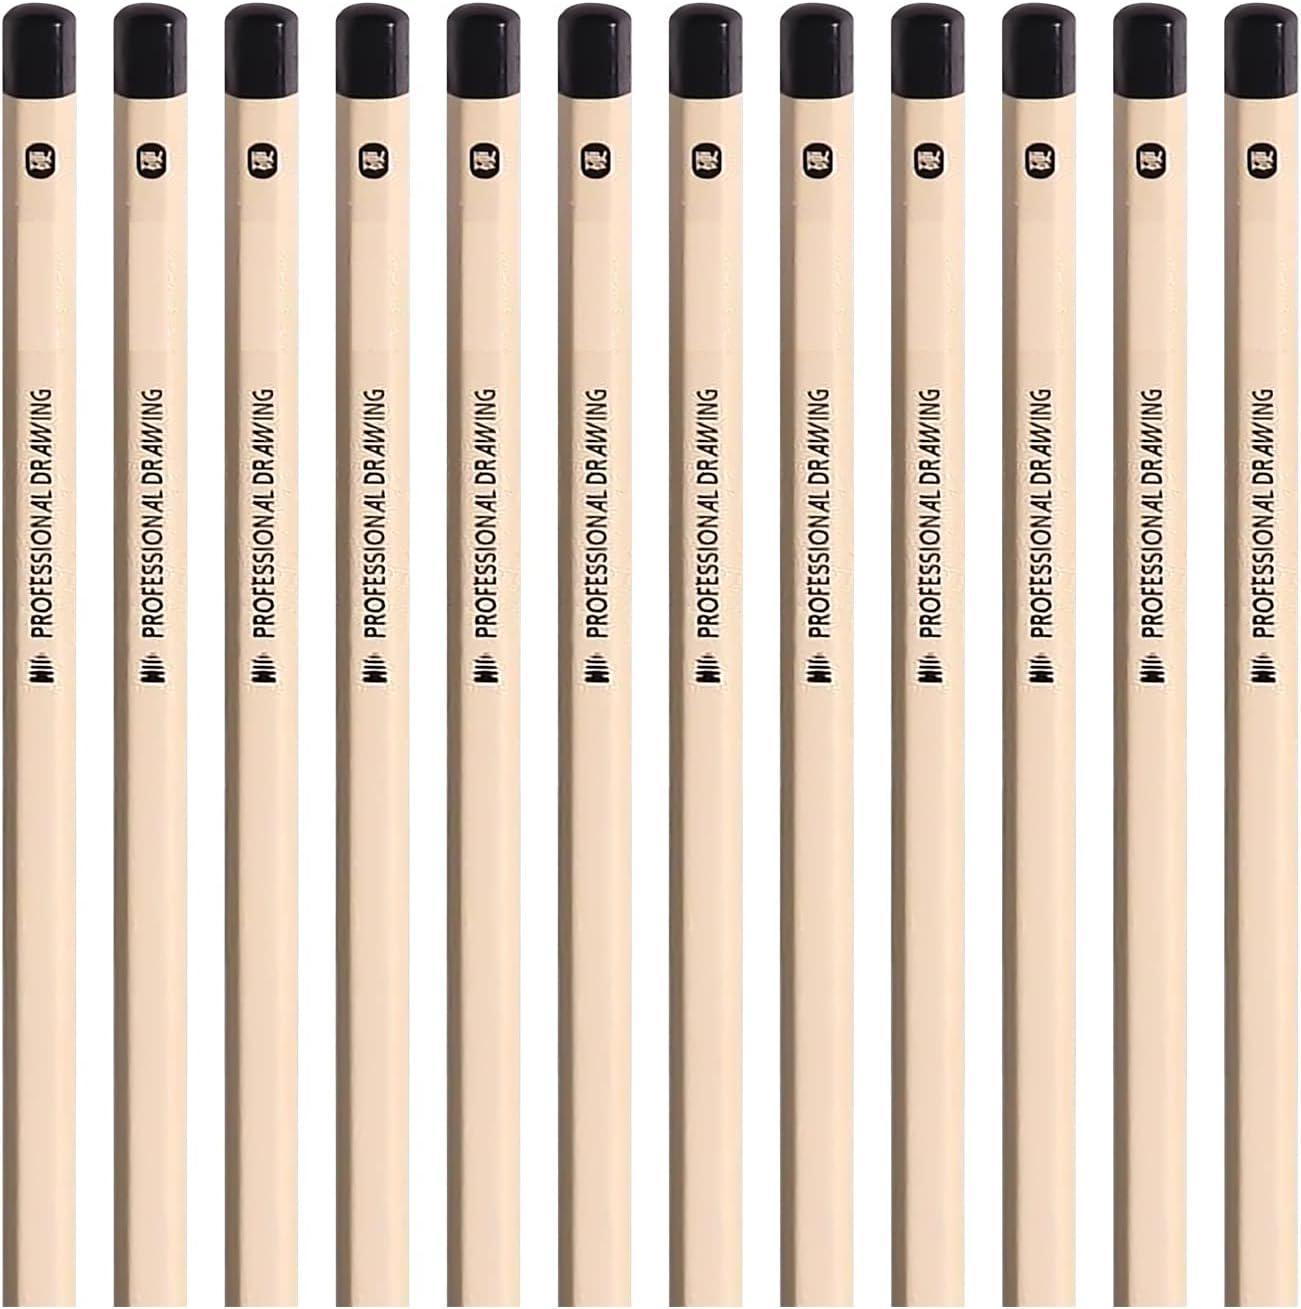 GREUS Drawing Pencils Sketch Pencils Set of and 50 similar items